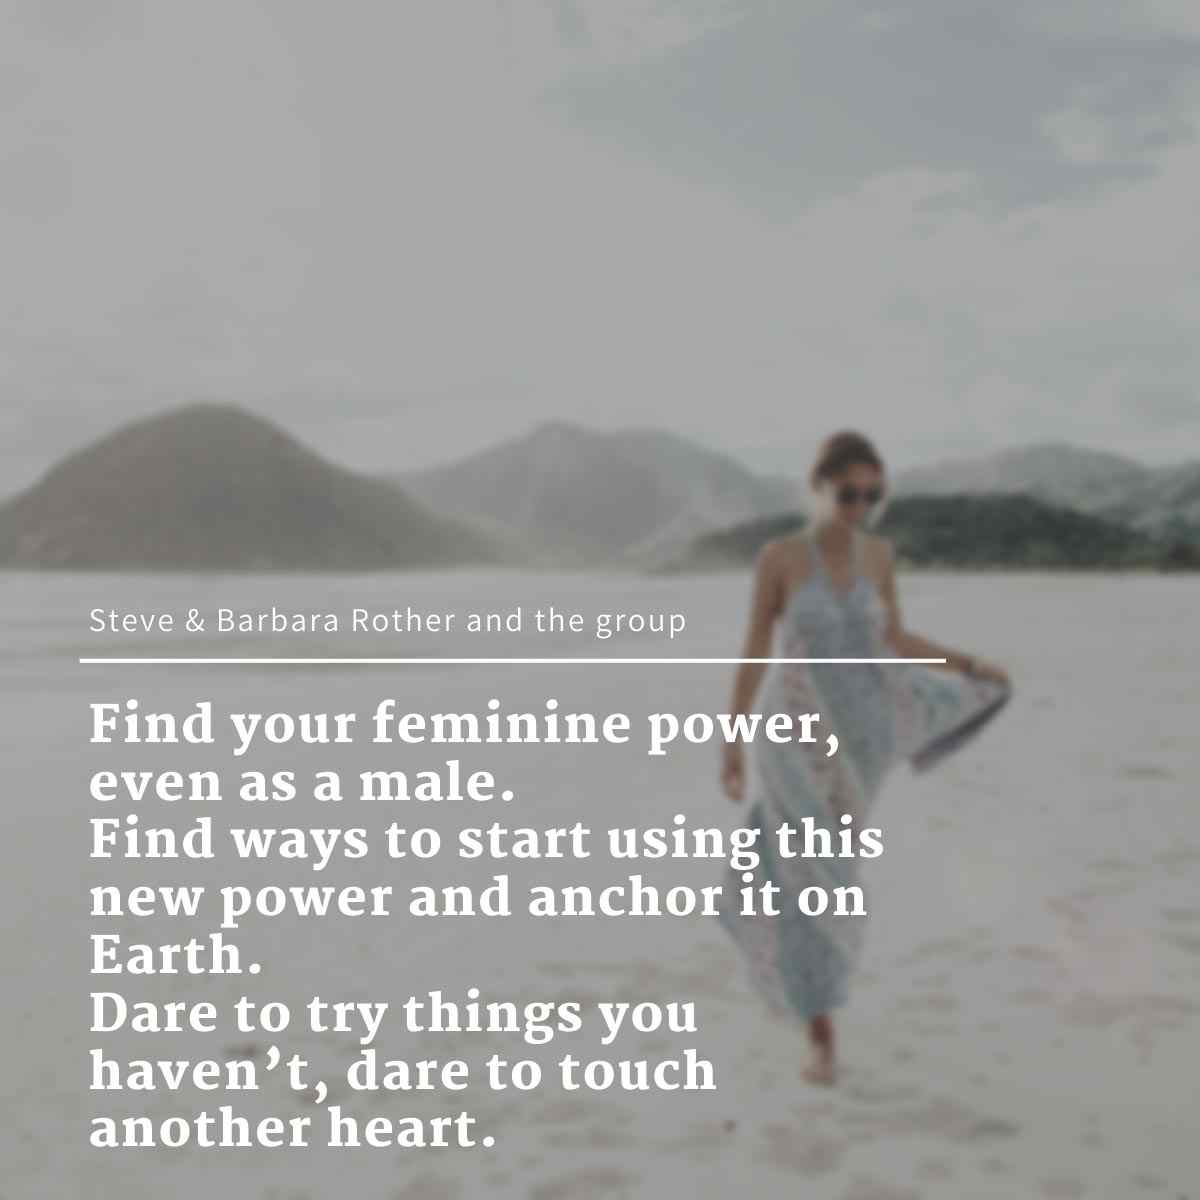 Find your feminine power